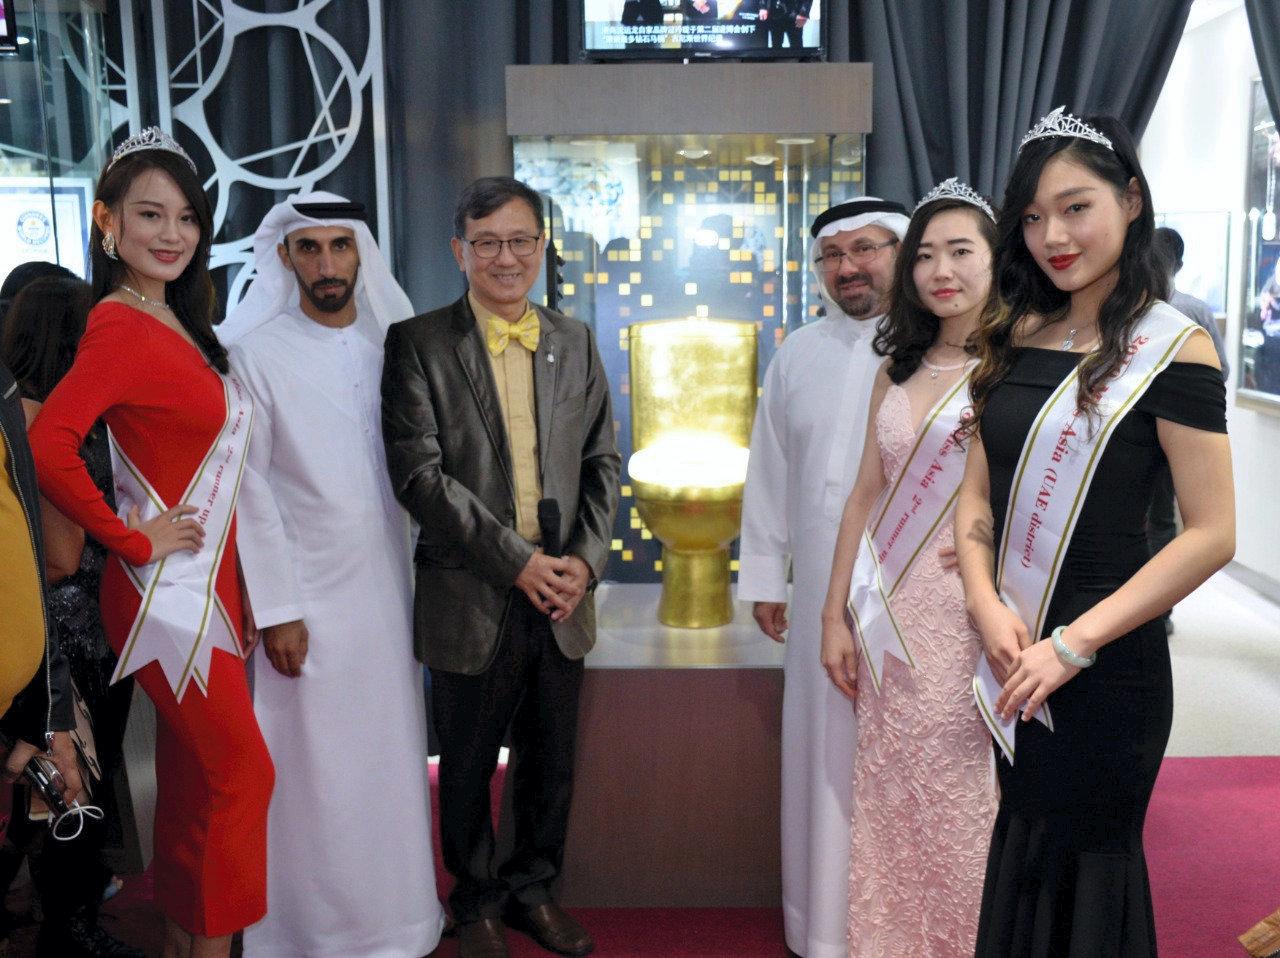 Dubai's Amazing Museum & Art Gallery Gets Record Breaking, Diamond